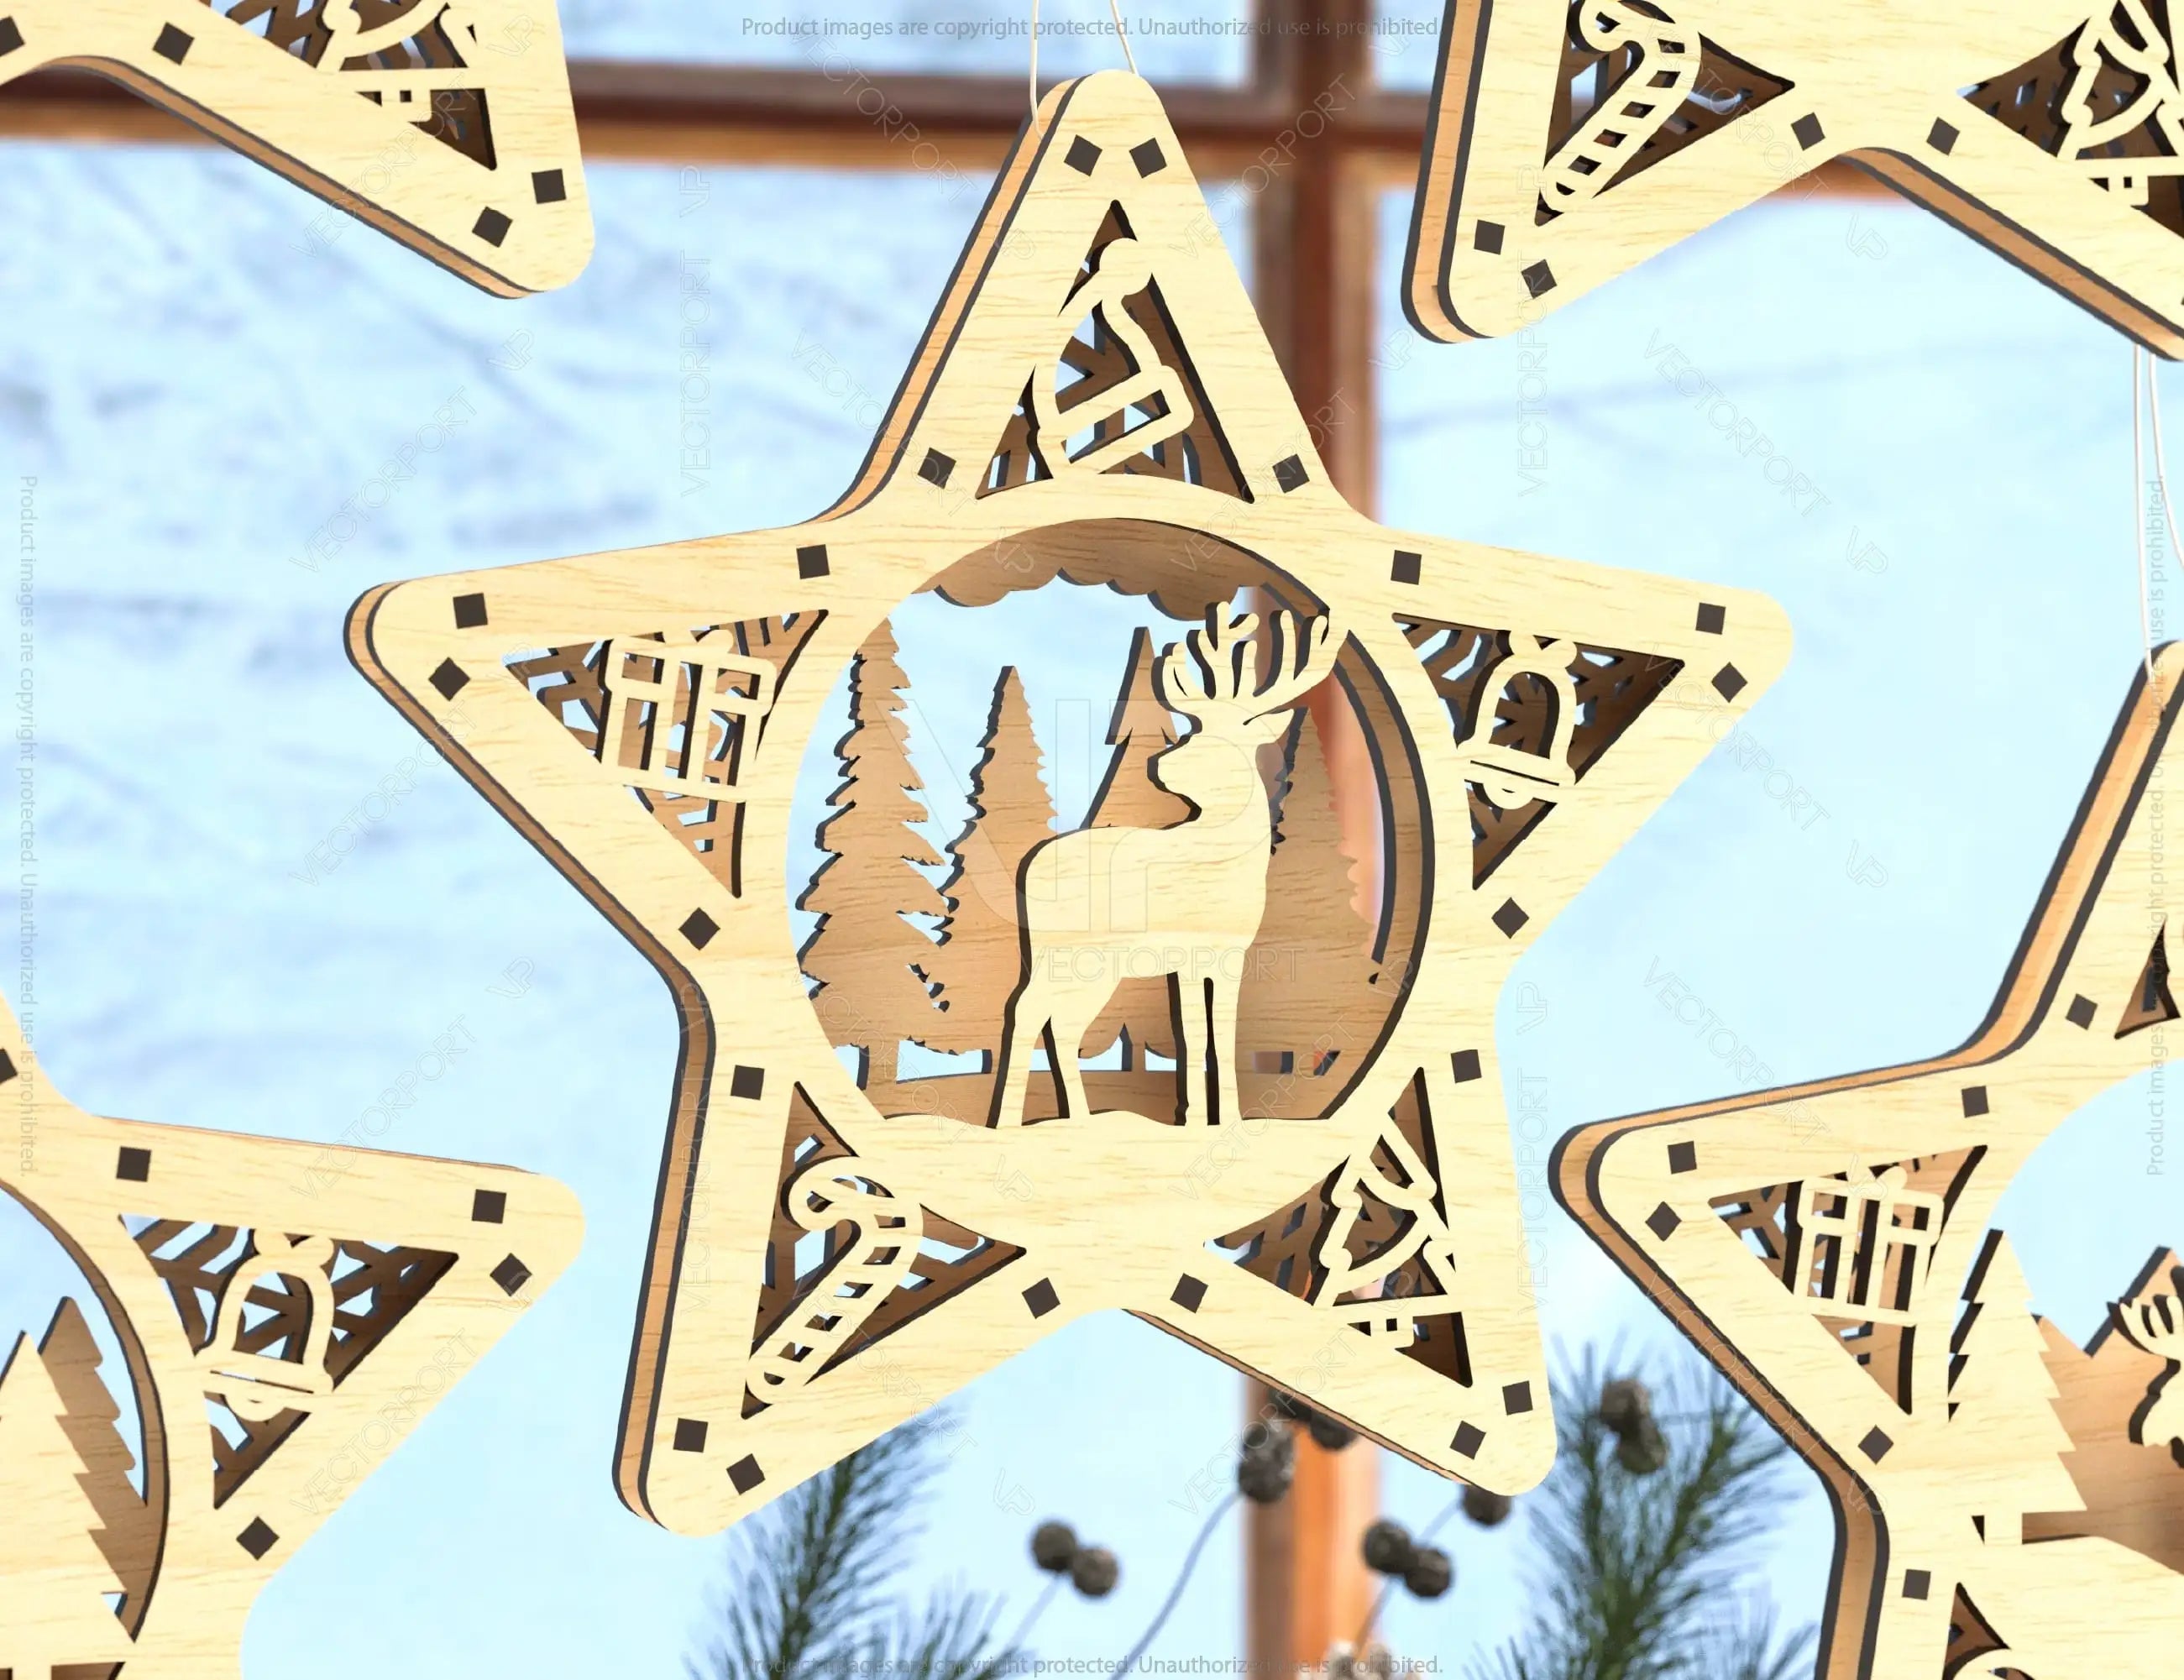 Star shape Christmas Tree Decorations Craft Hanging Bauble Snowy Scene Deer New Year Décor Laser cut Digital Download |#U313|